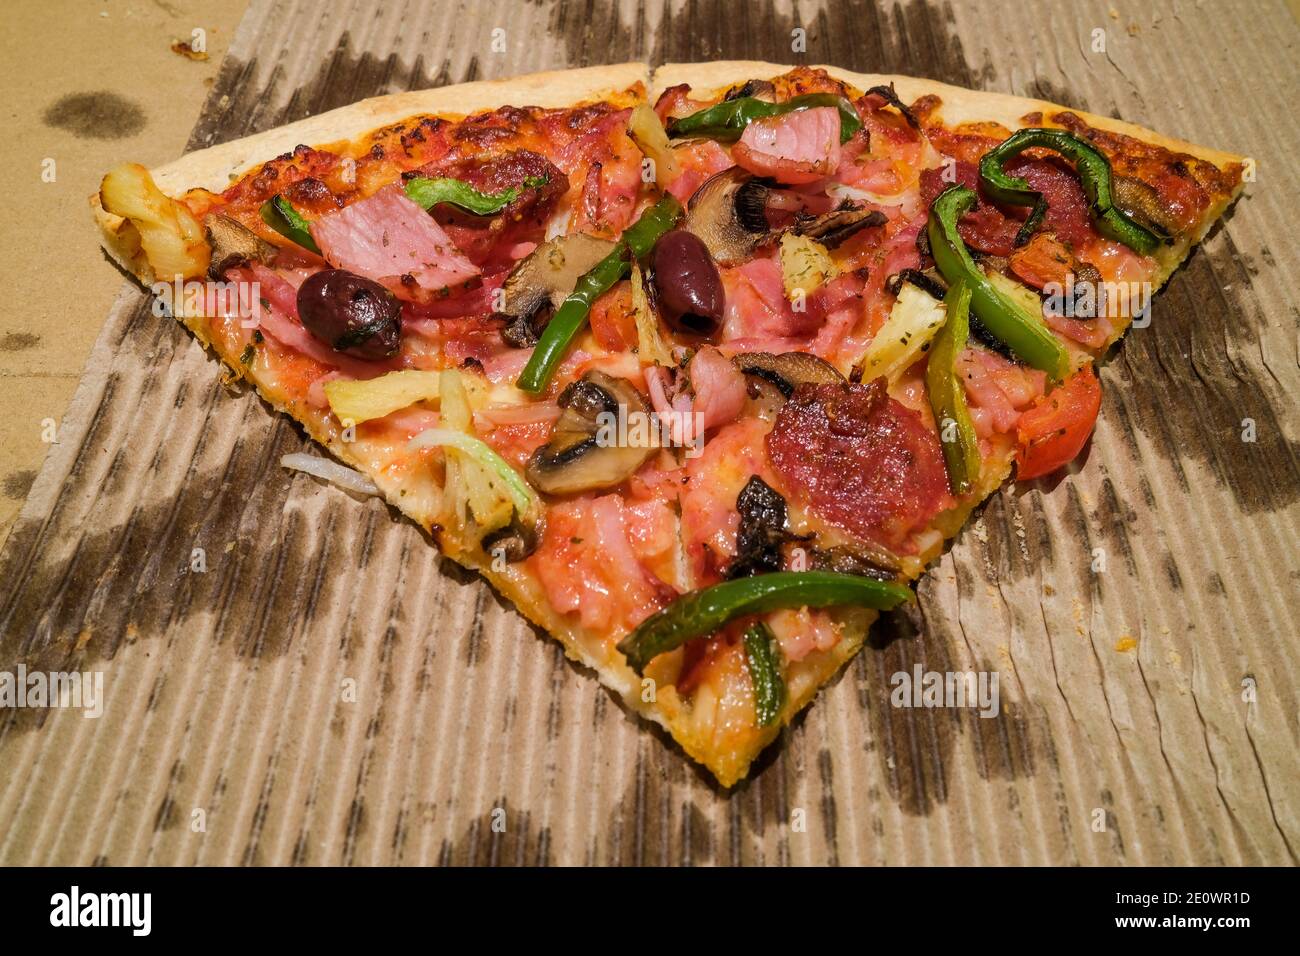 Takeaway pizza in cardboard box. Stock Photo